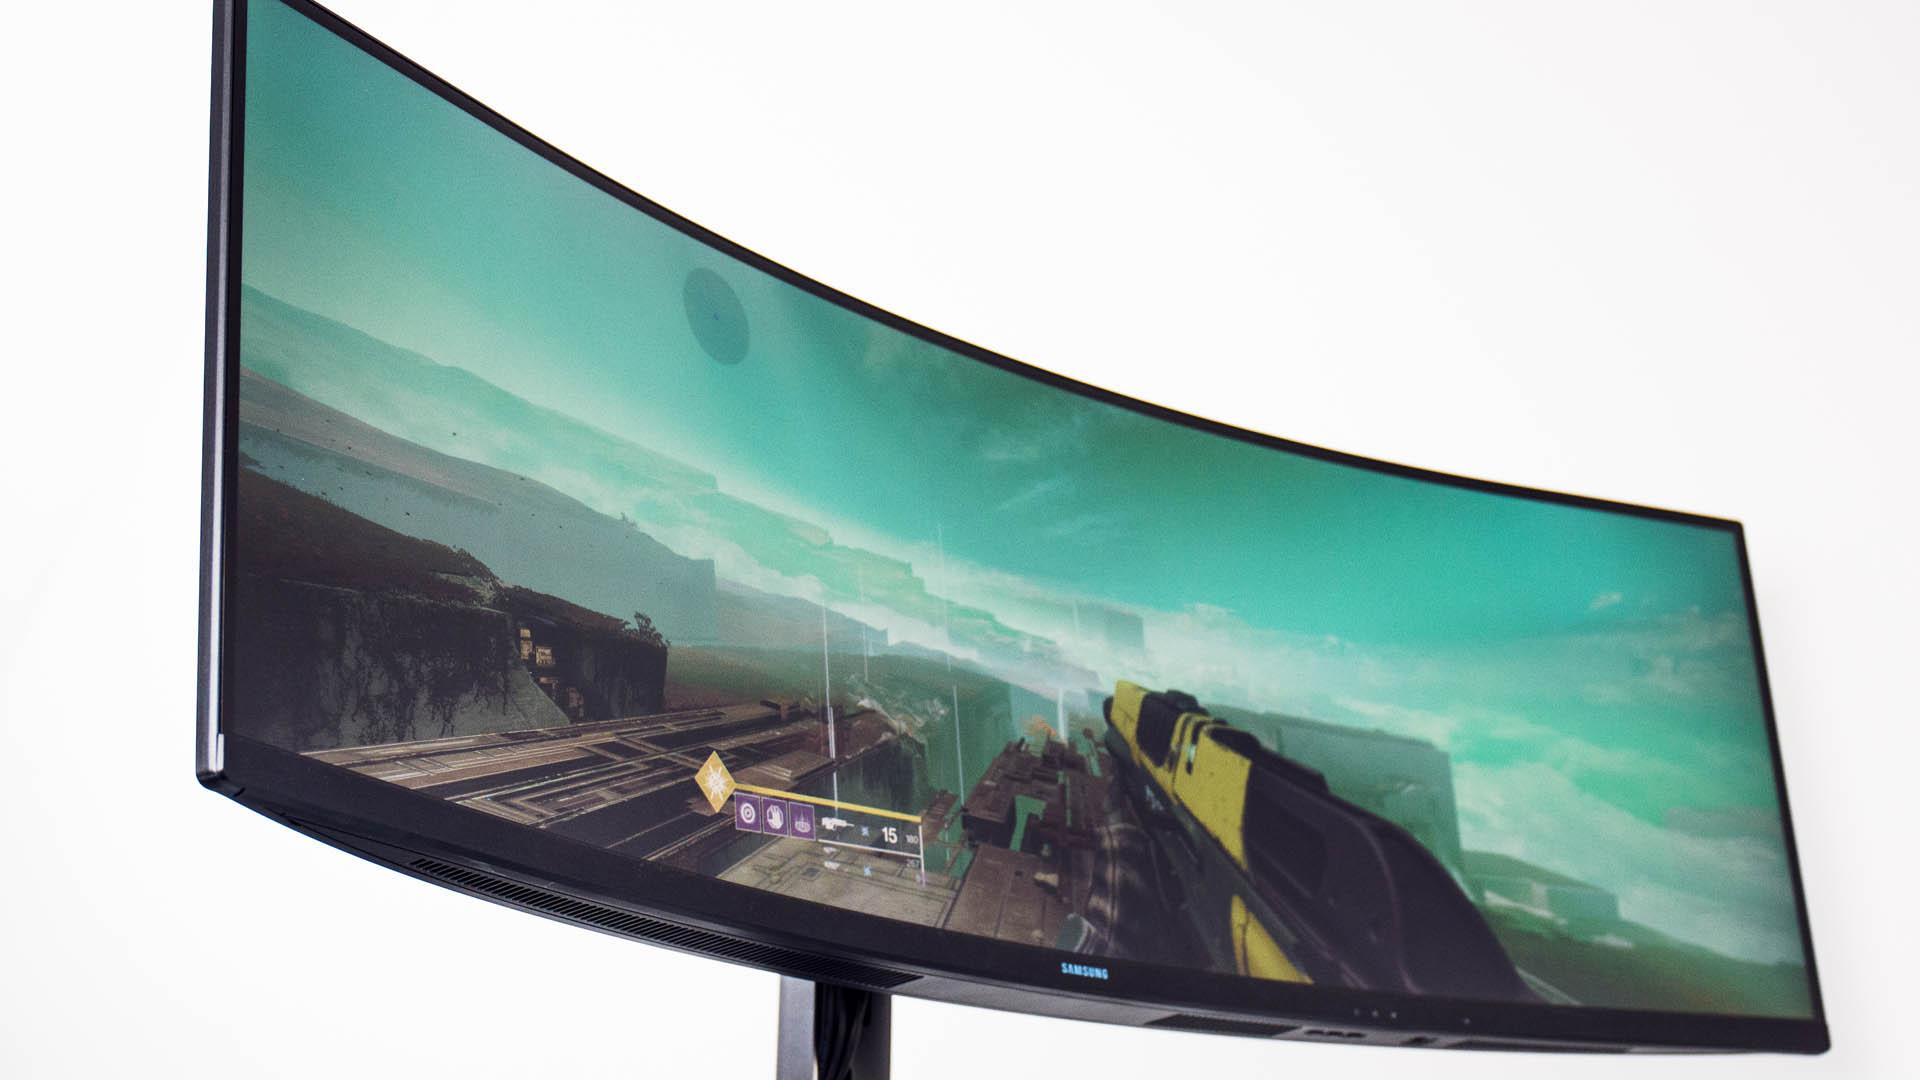 Samsung C49RG90 review: more than an ultrawide gaming monitor